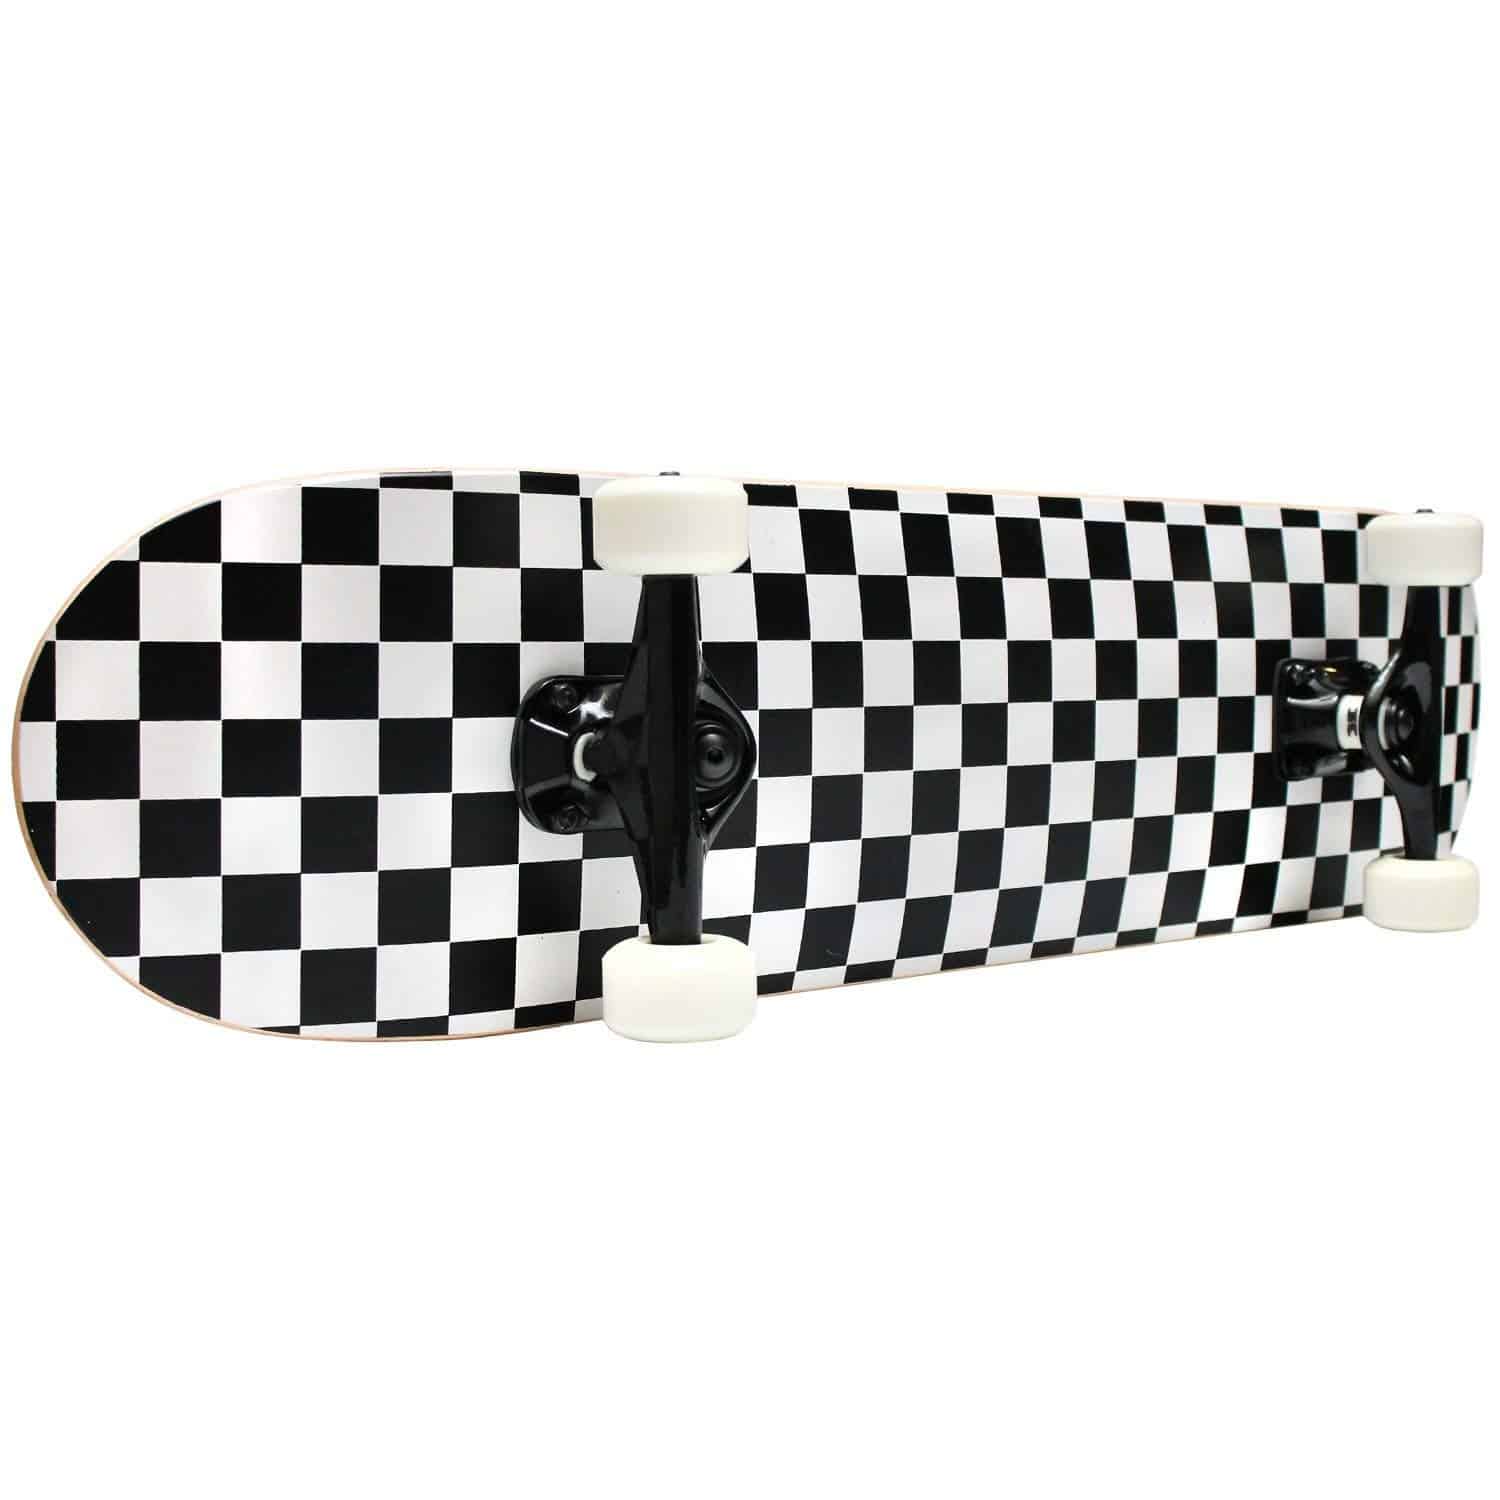 KPC Pro Skateboard